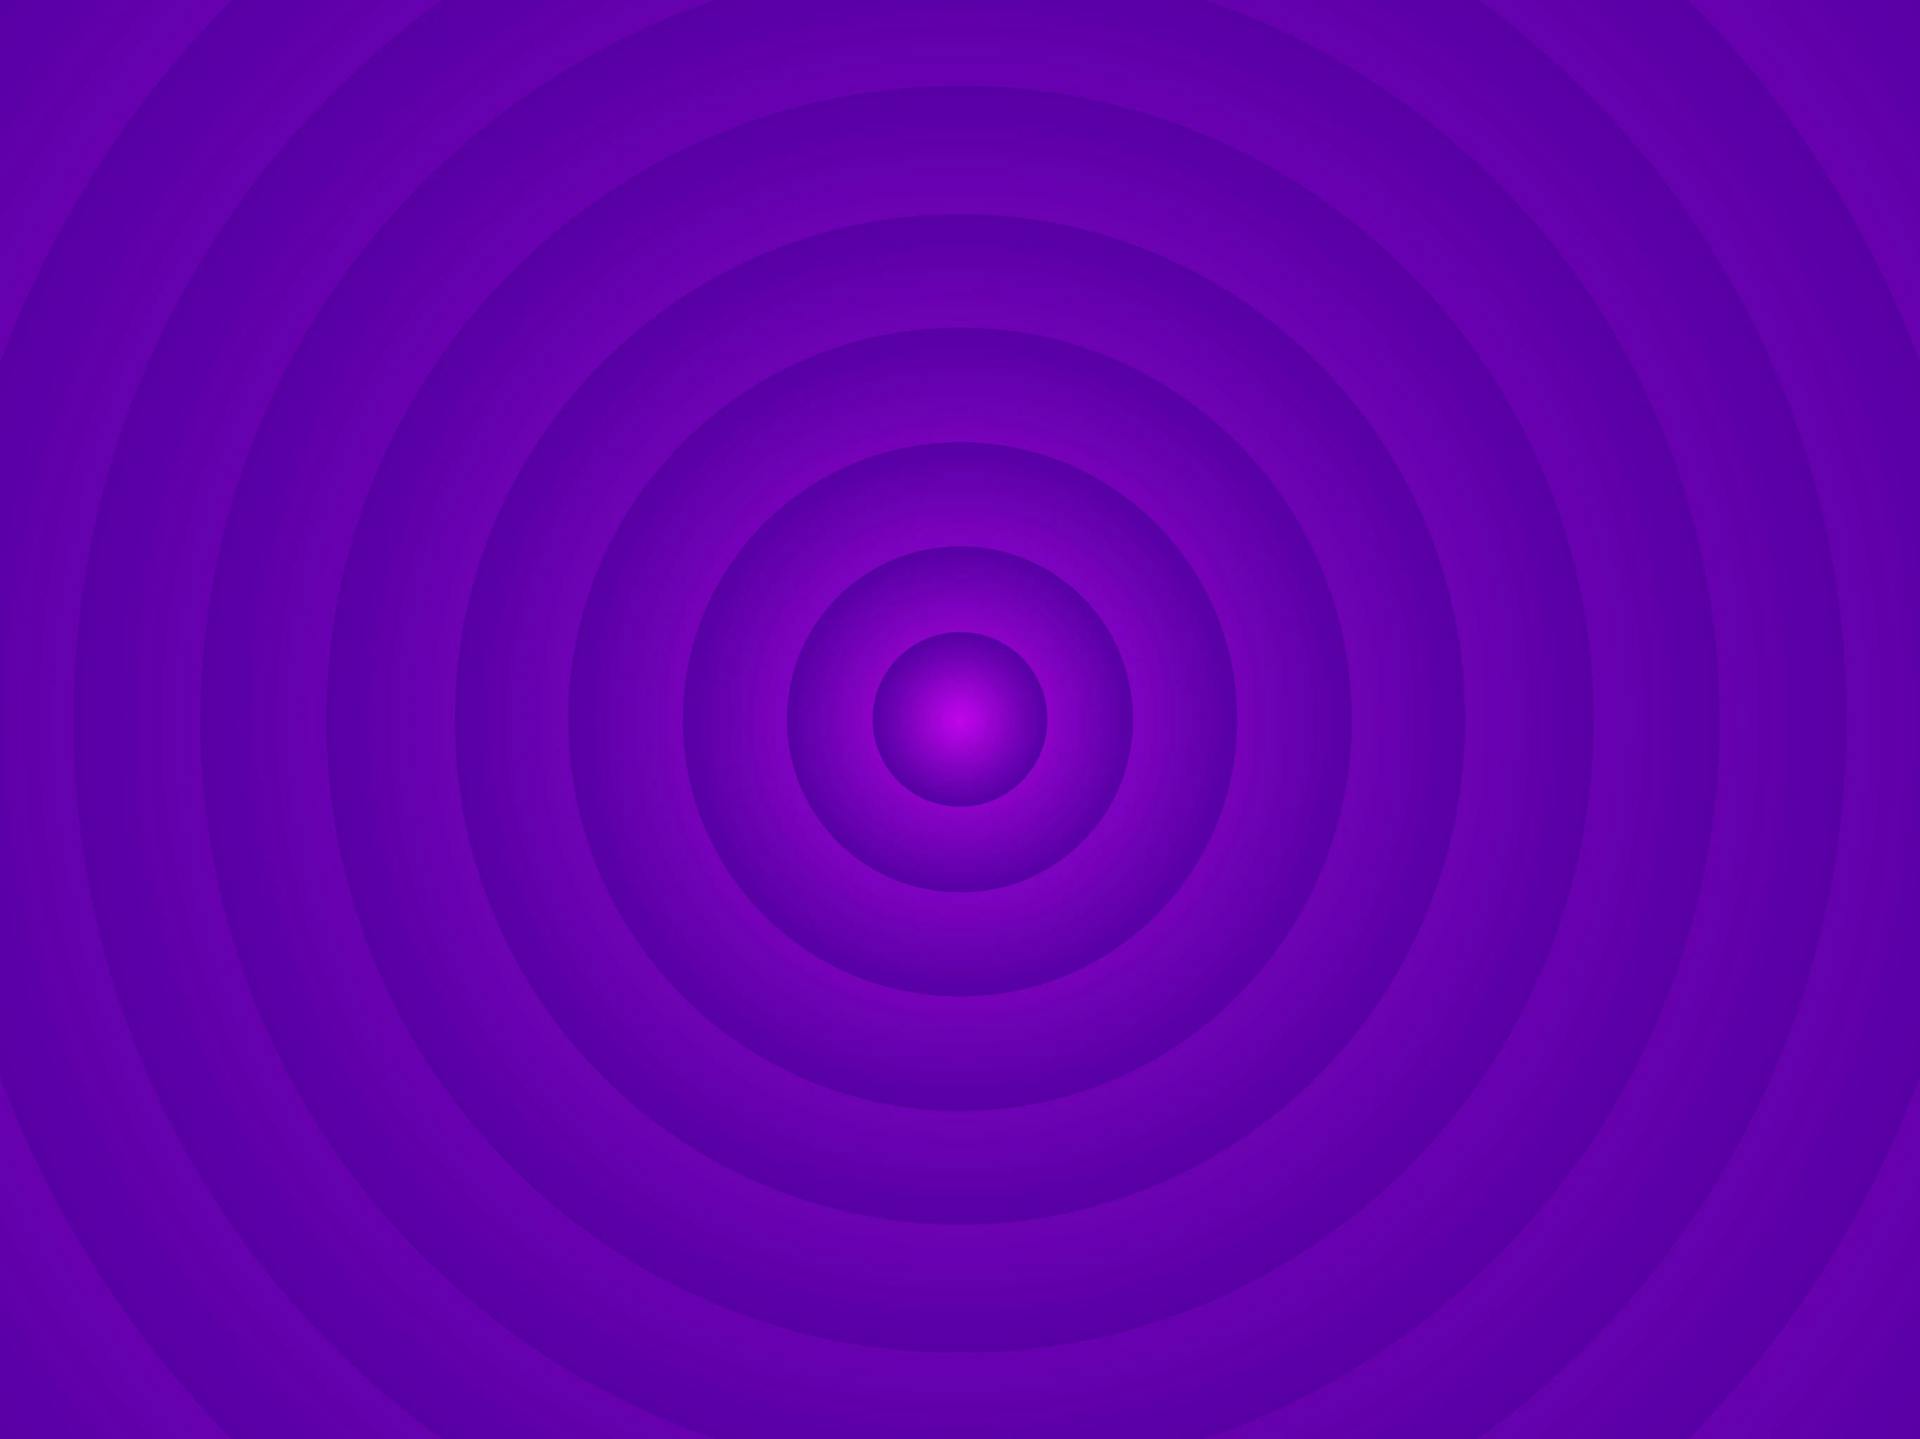 Orbital Ombre Purple blend illustration background template